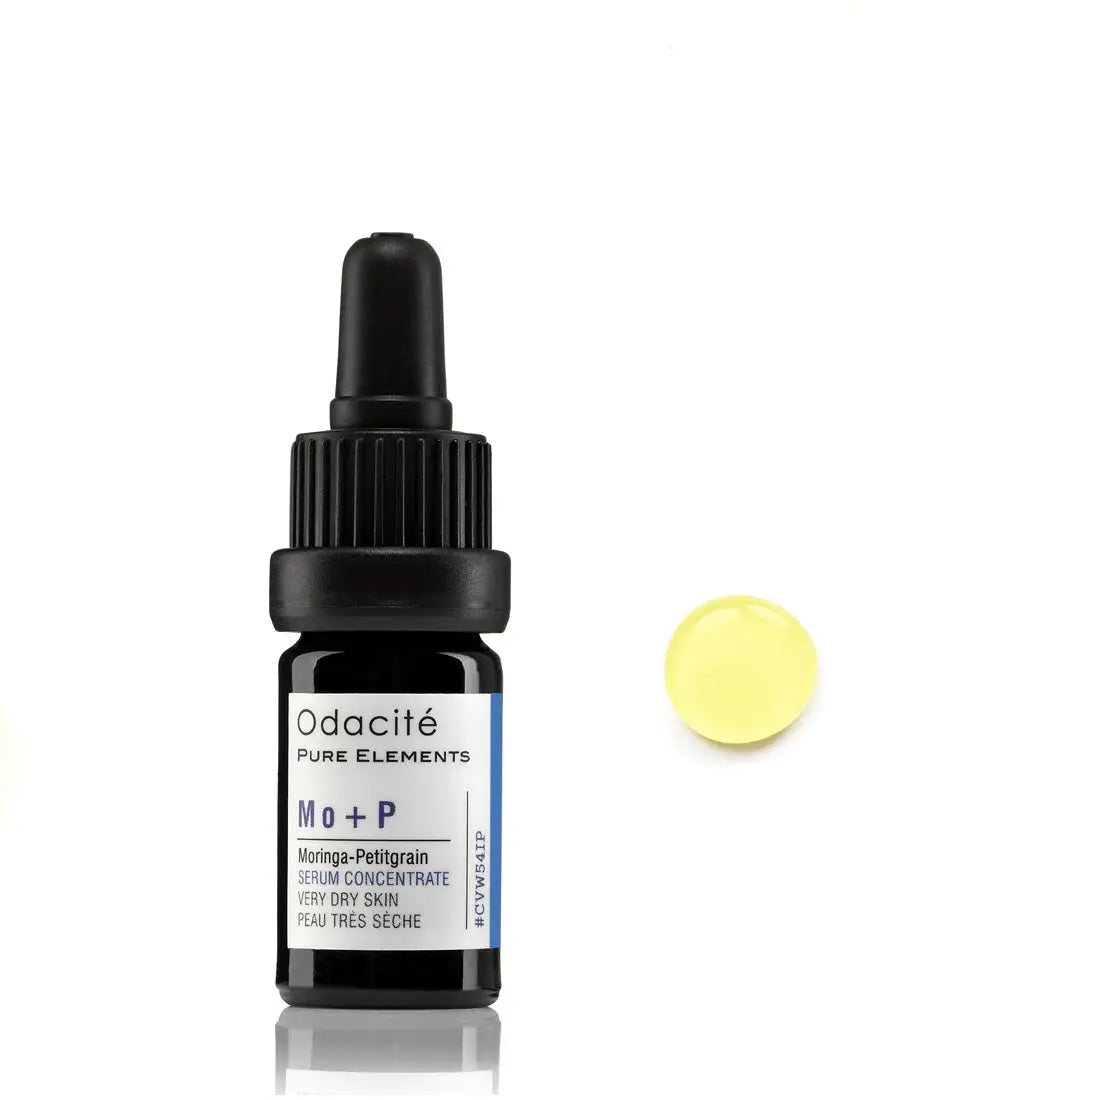 Odacite Mo+P Very Dry Skin Serum 5ml - Free Shipping 